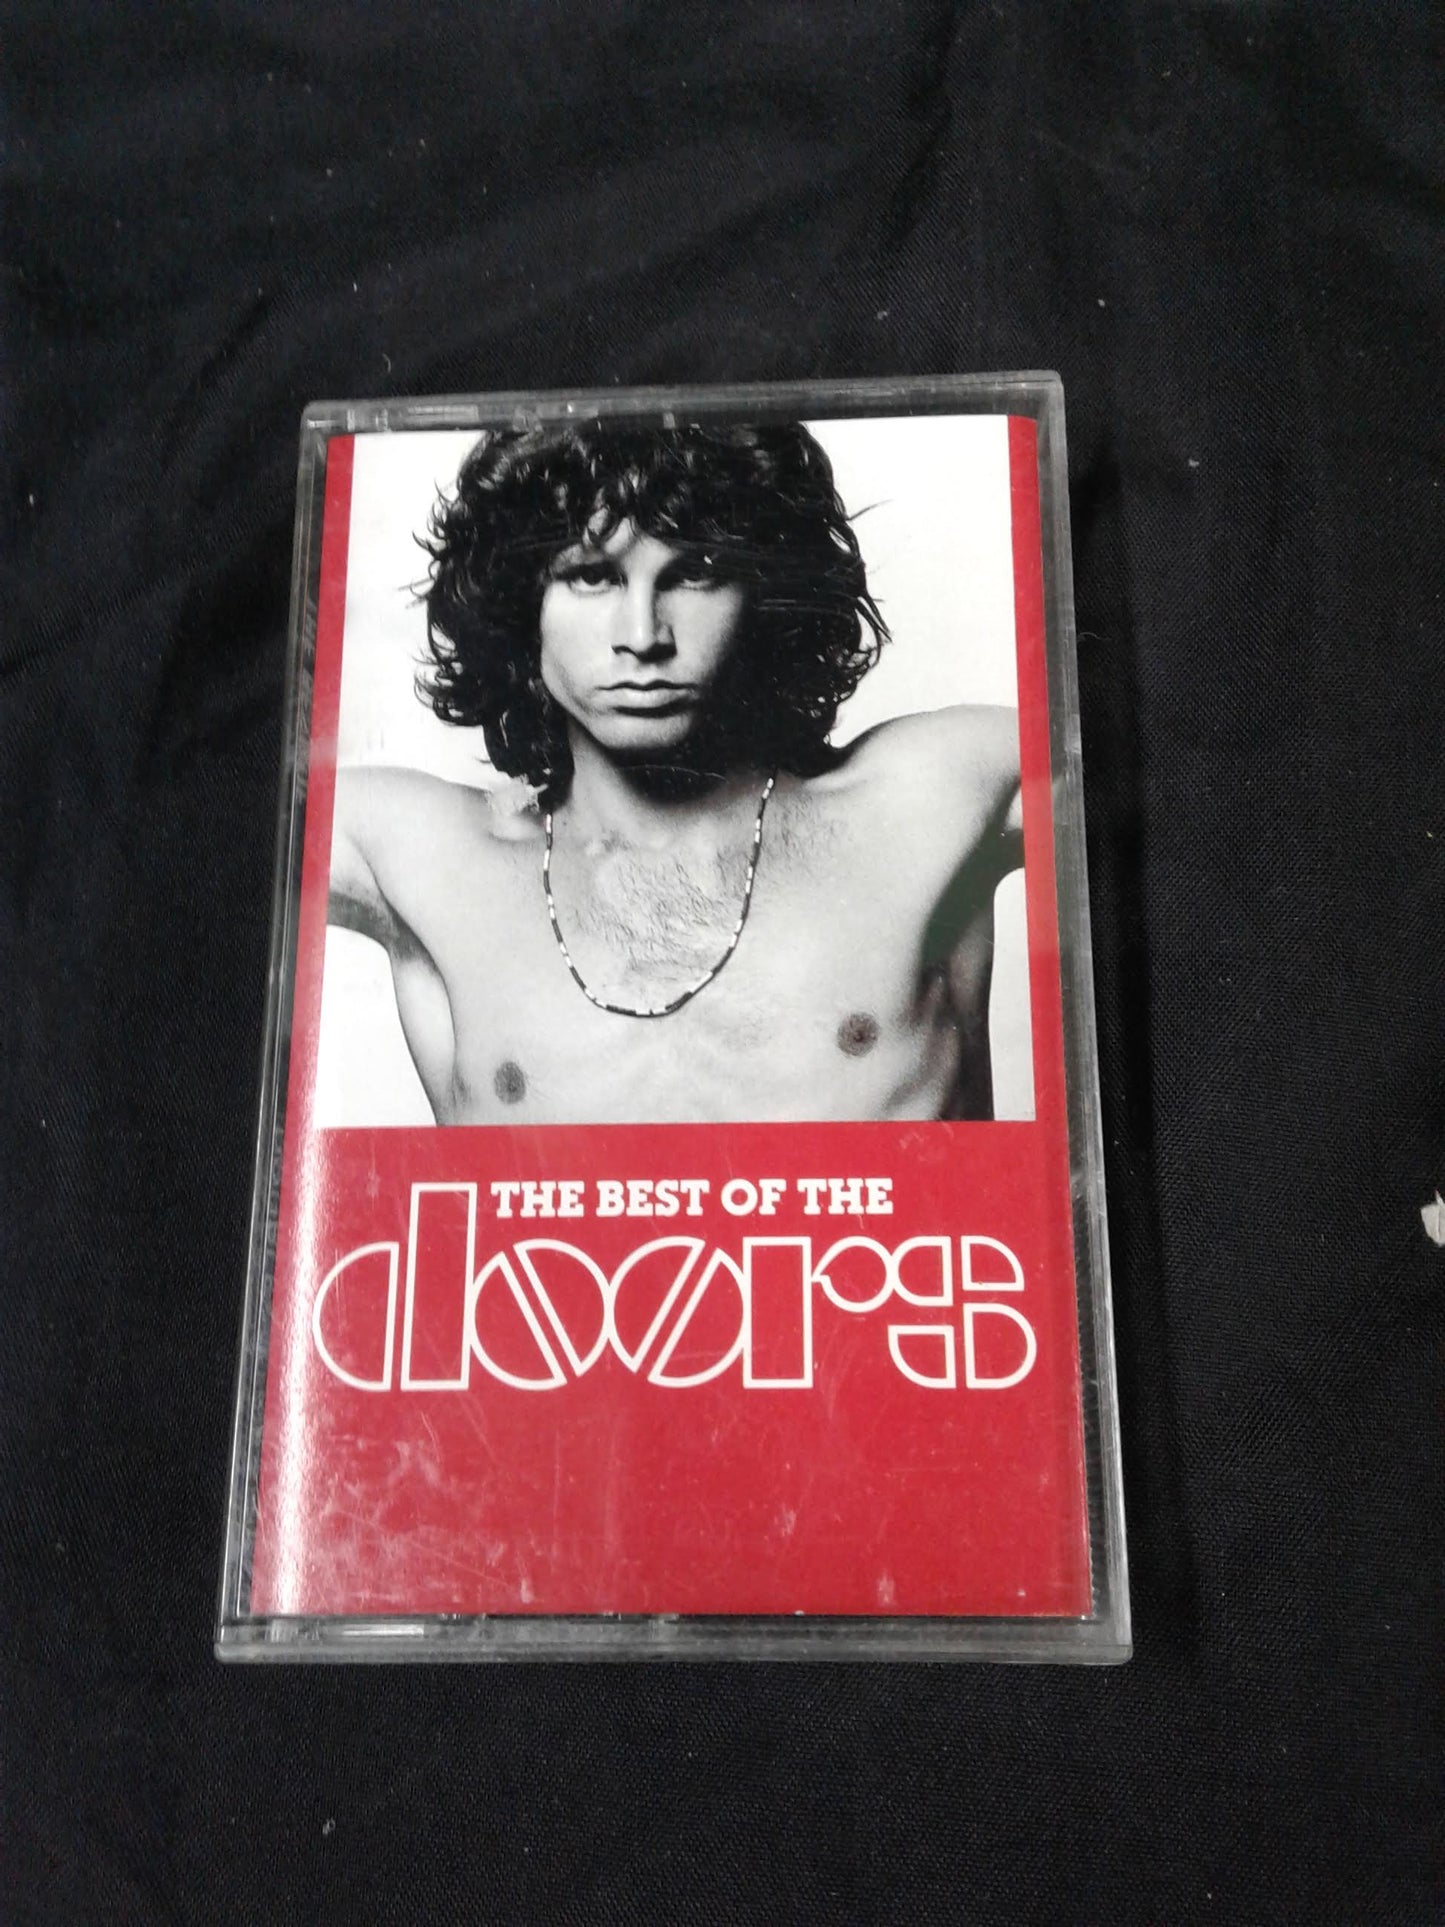 Cassette The best of the Doors